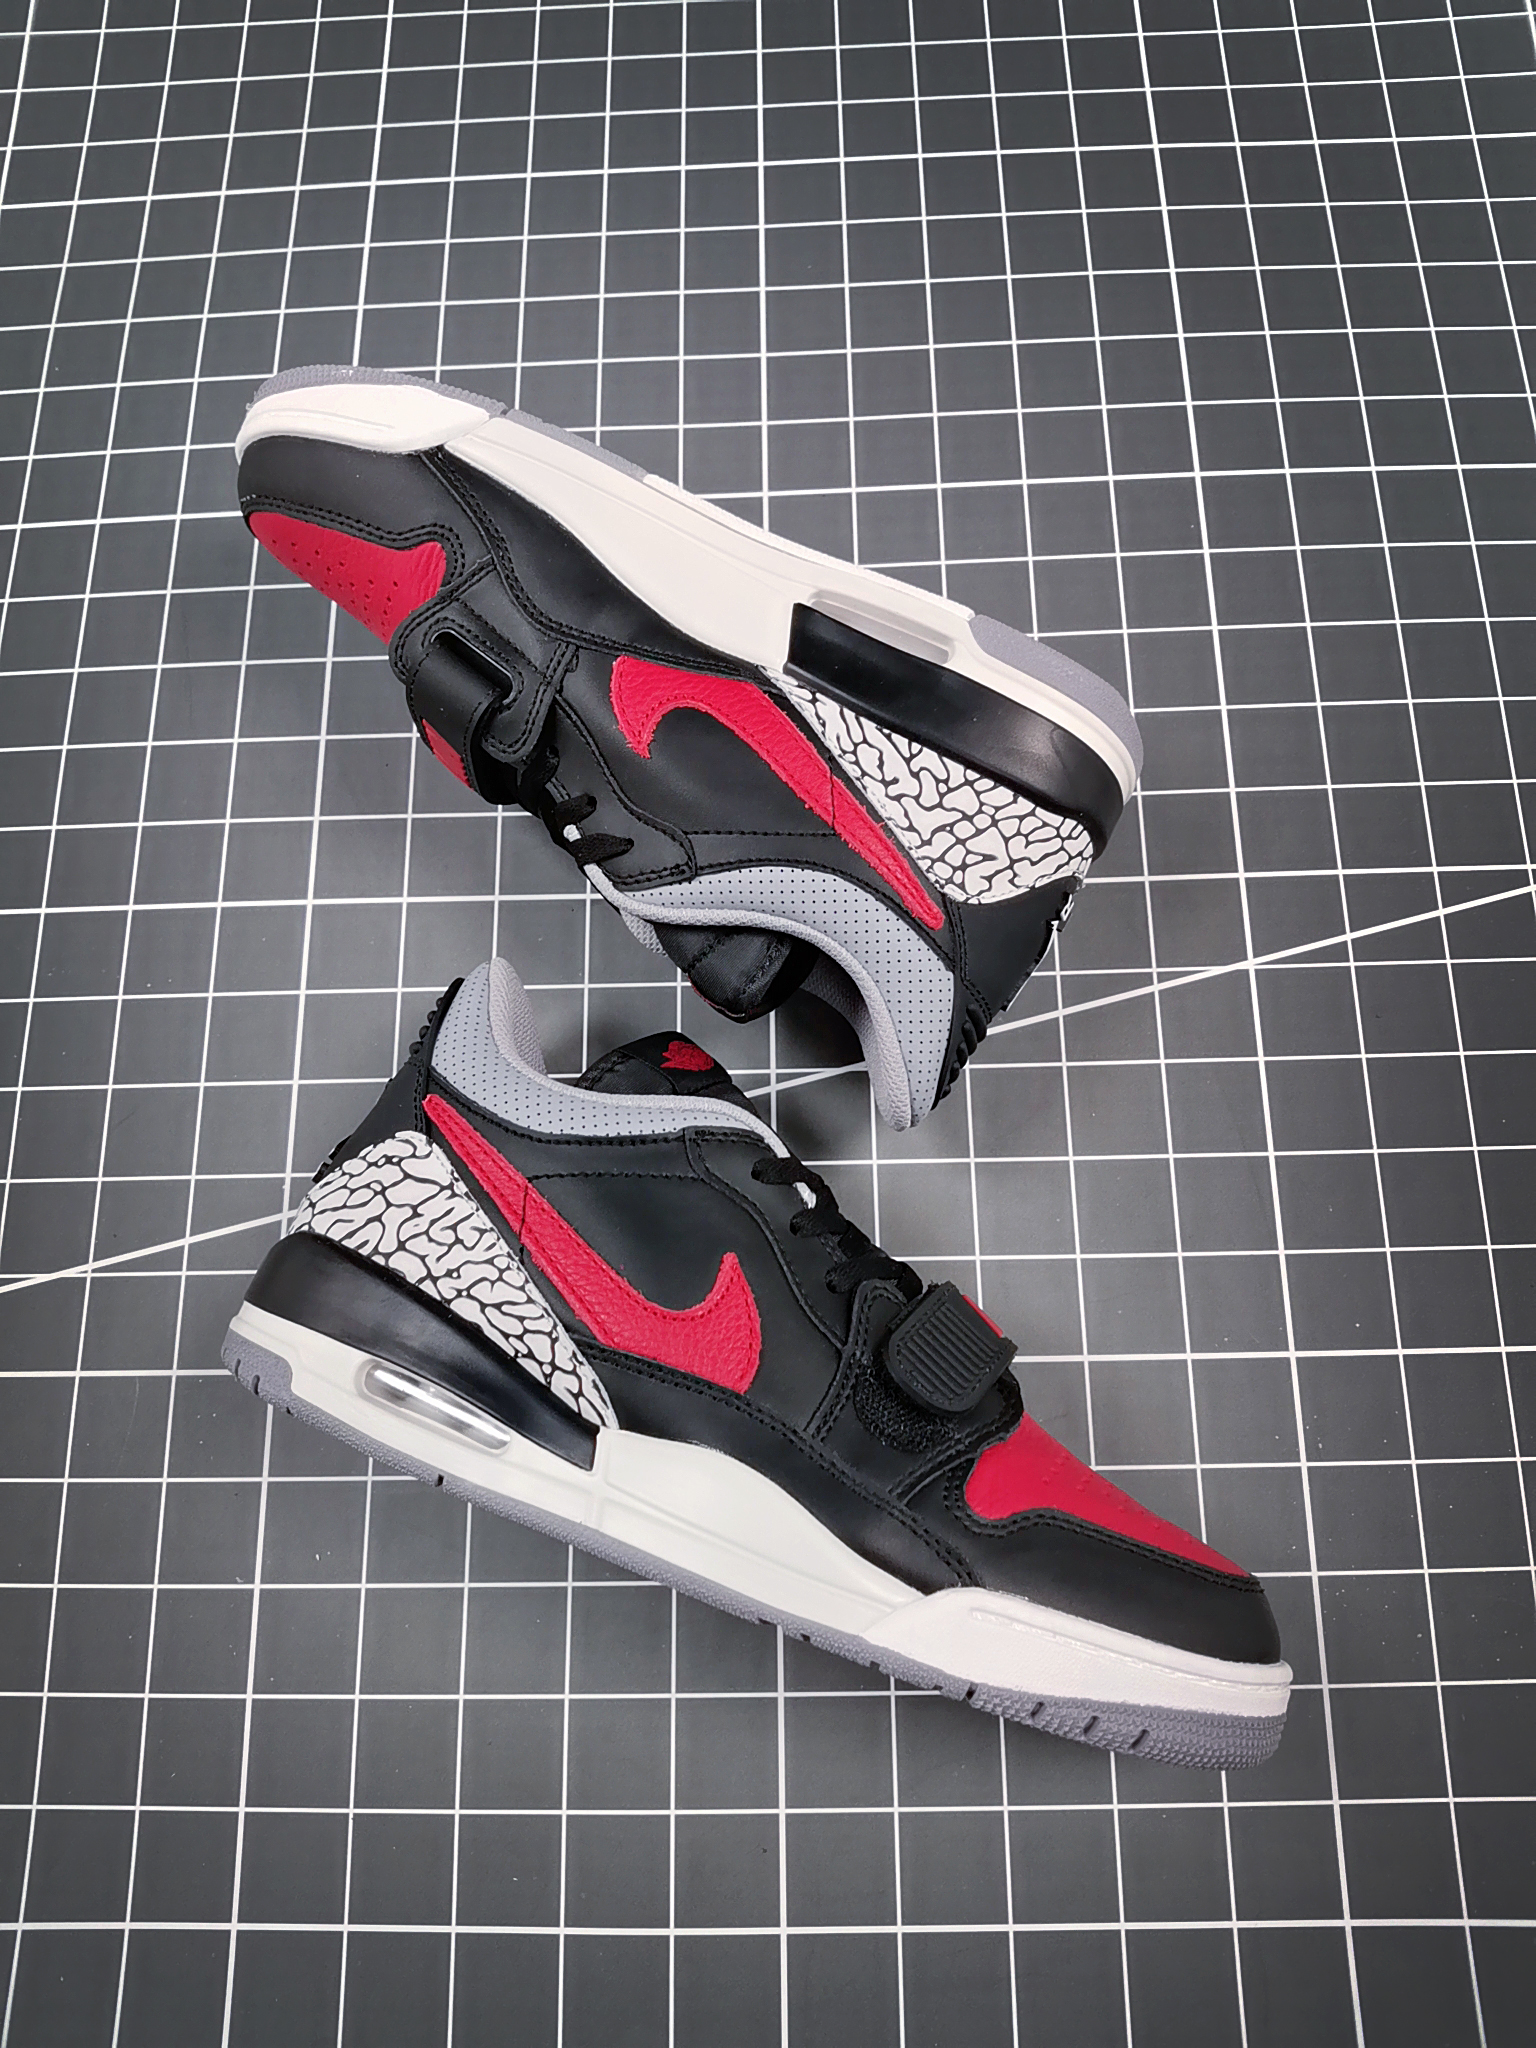 2021 Jordan Legacy 312 Low Black Cement Red Shoes